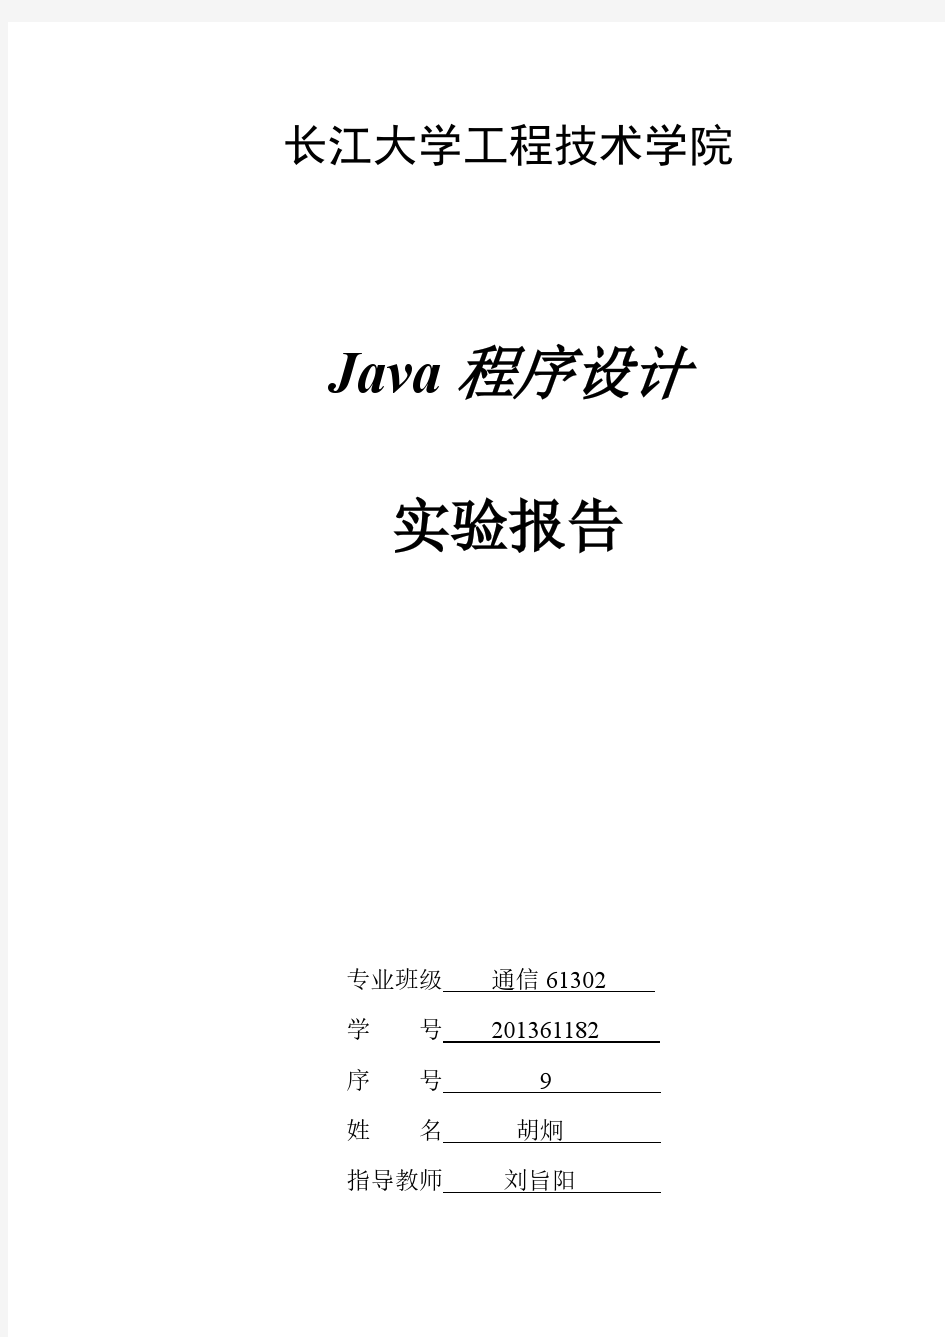 Java程序设计计算器实验报告